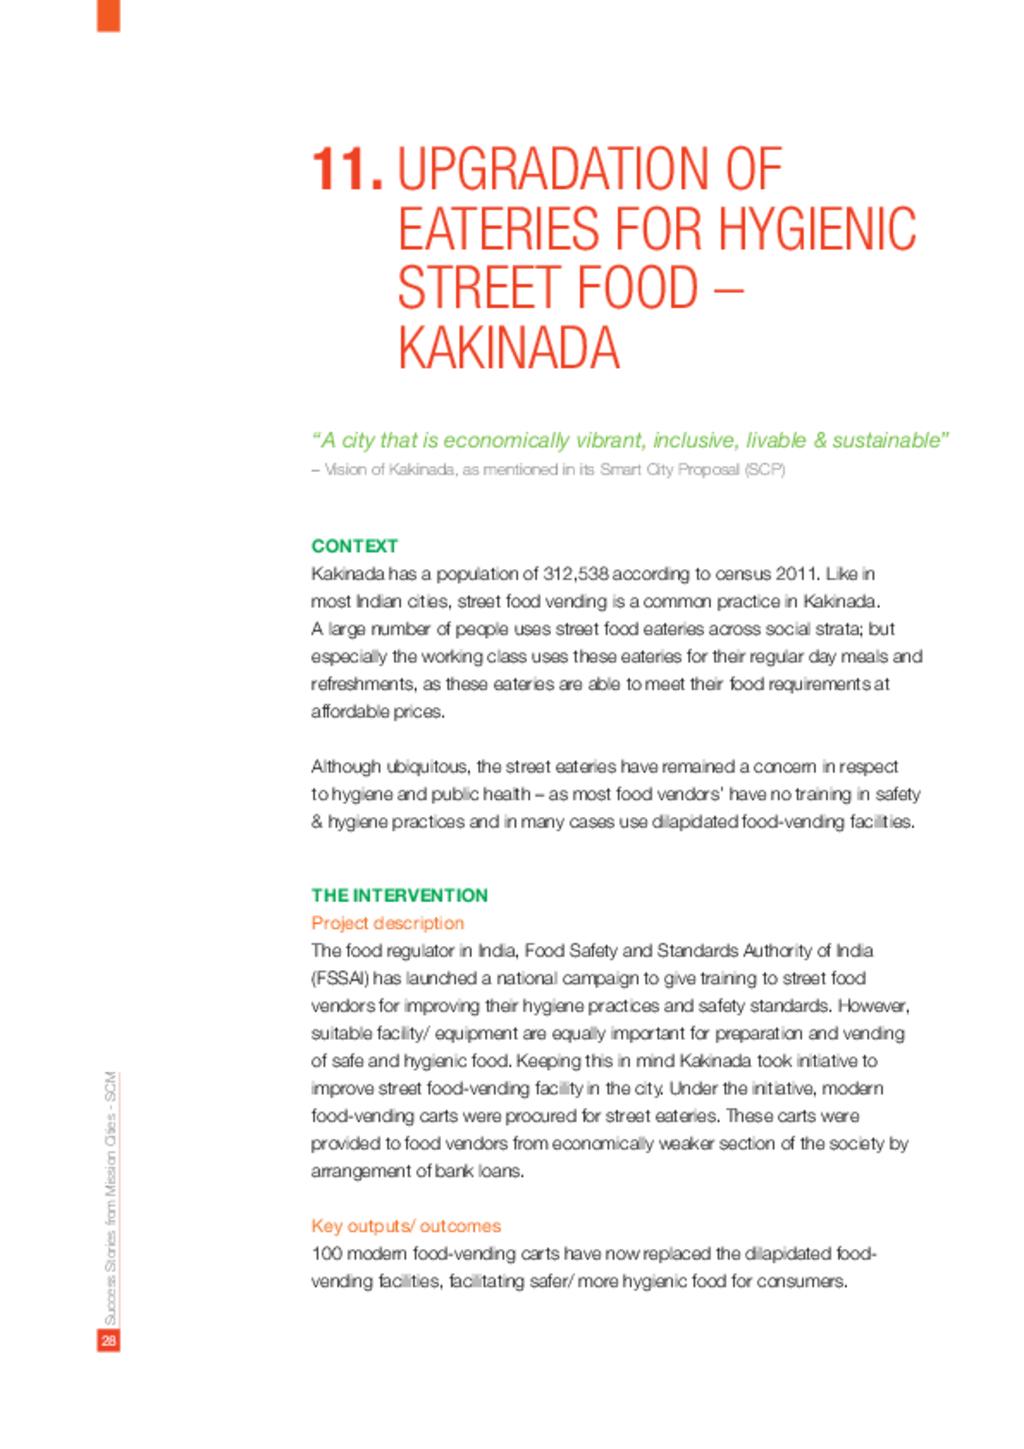 Upgradation of Eateries for Hygienic Street Food - Kakinada